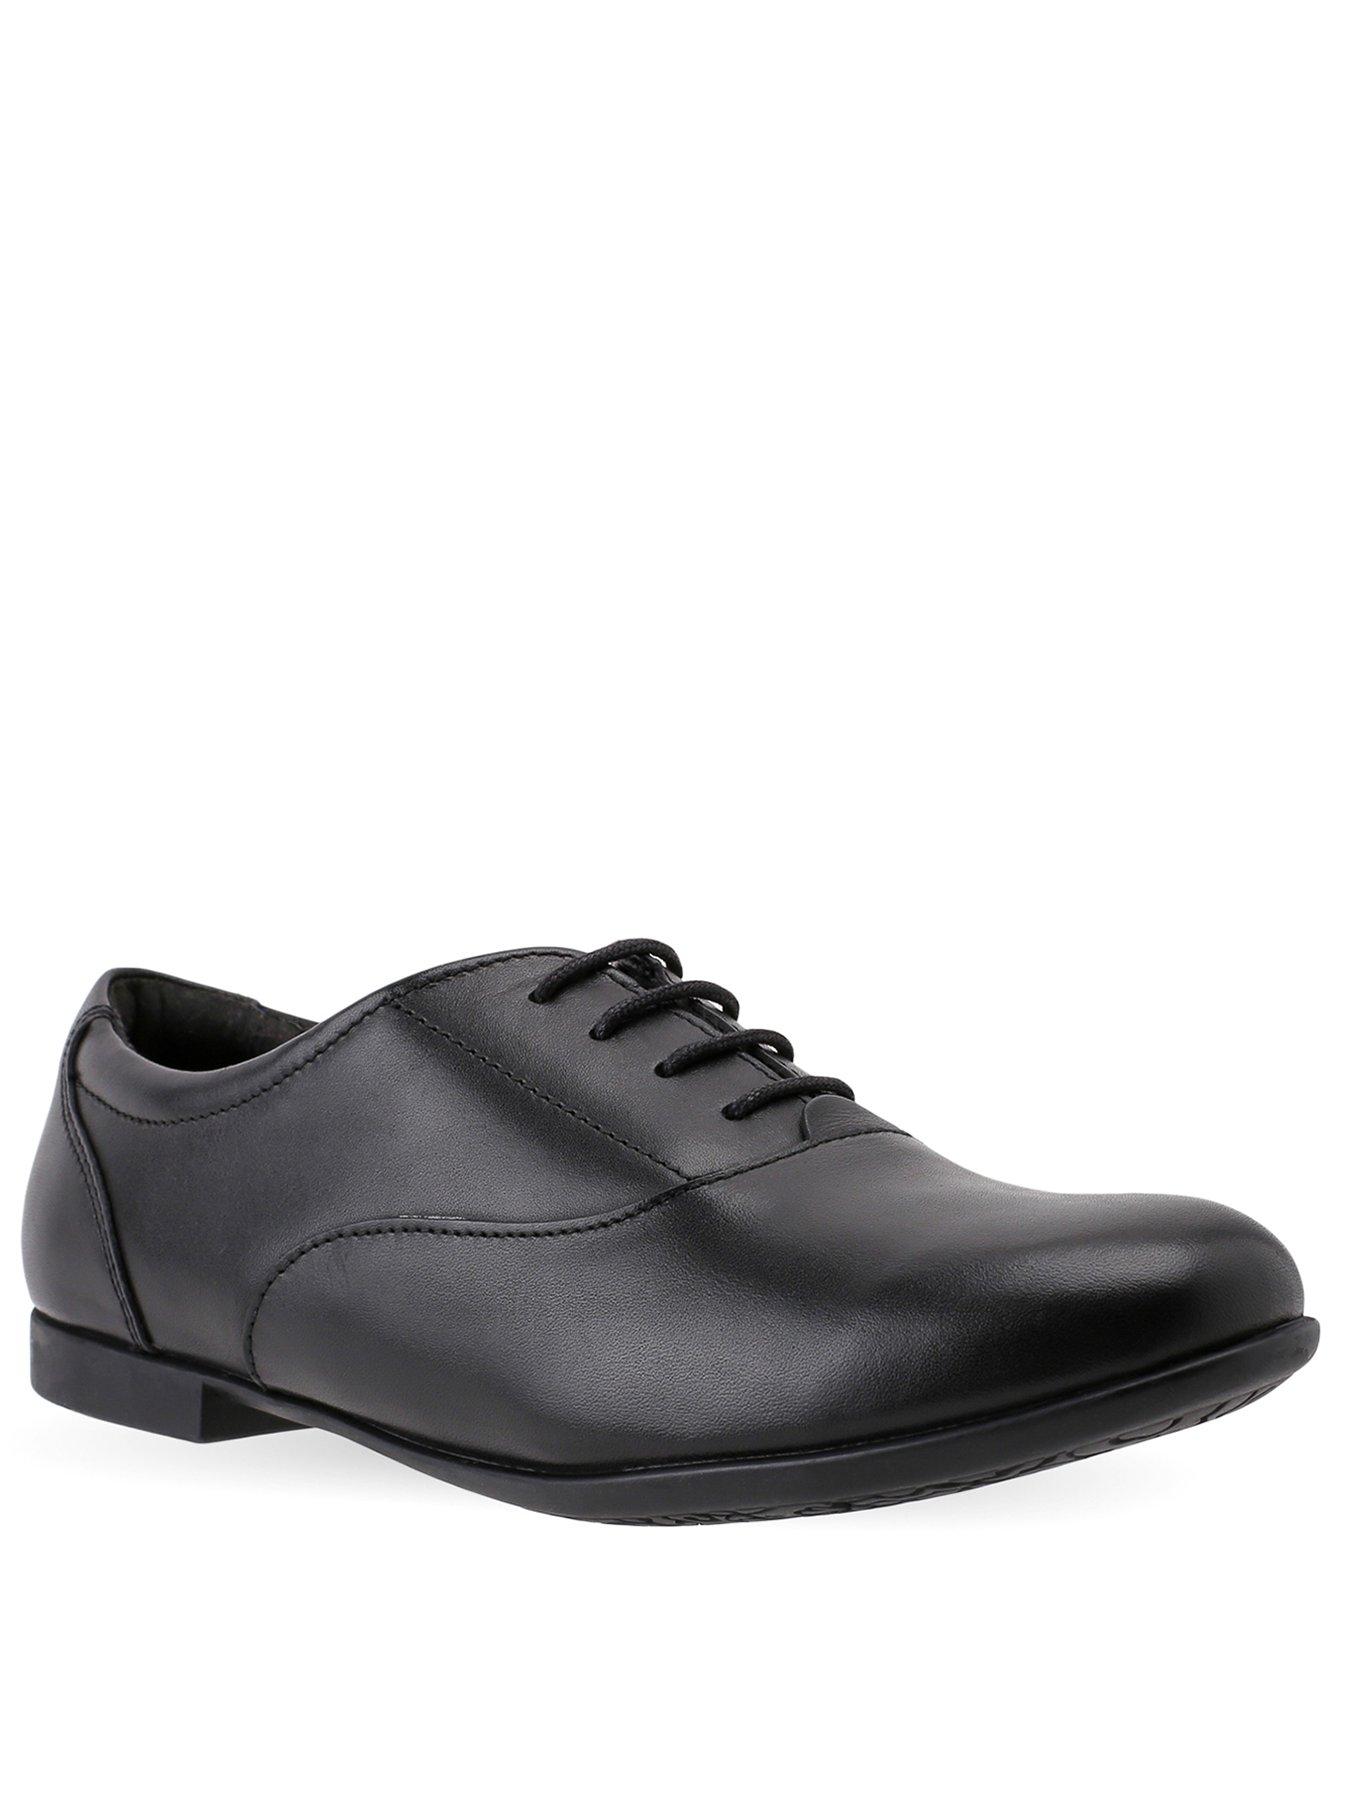 School & uniform Talent School Shoe - Black Leather